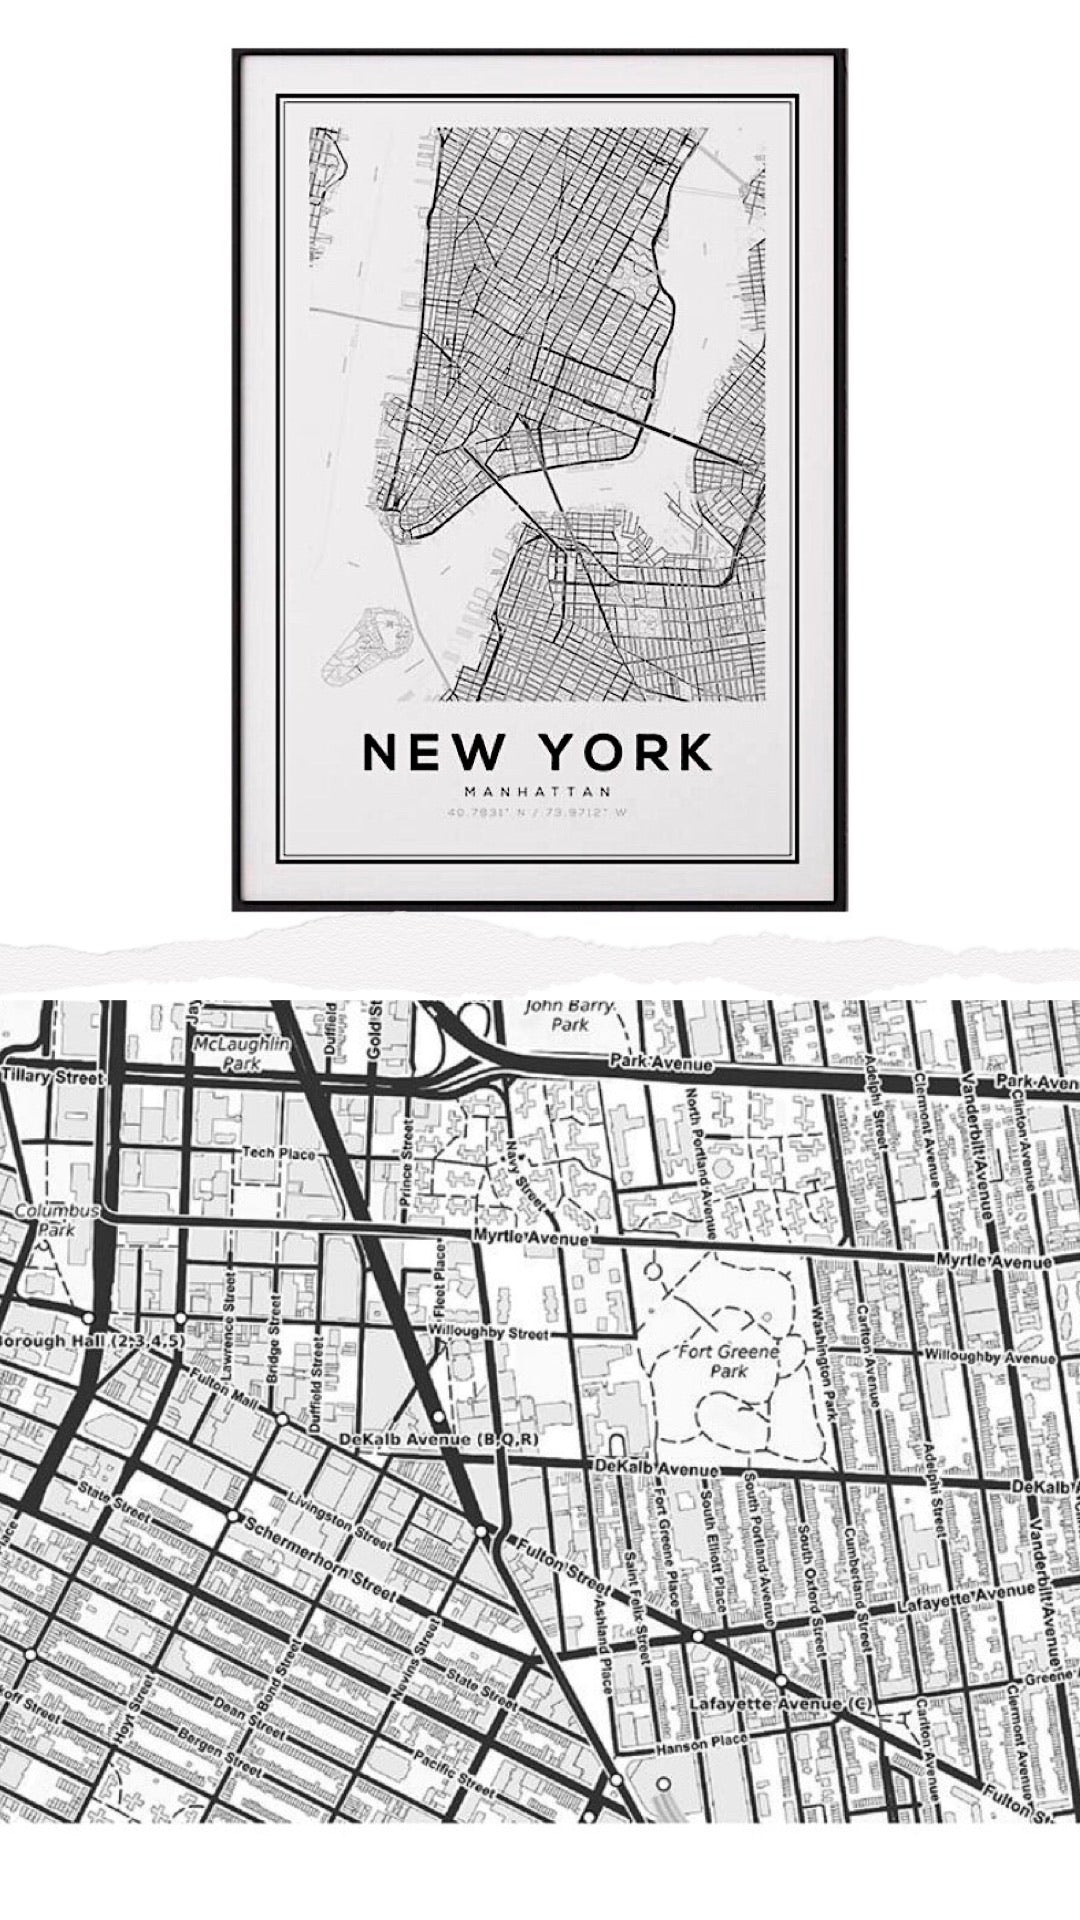 City maps - THE WALL STYLIST